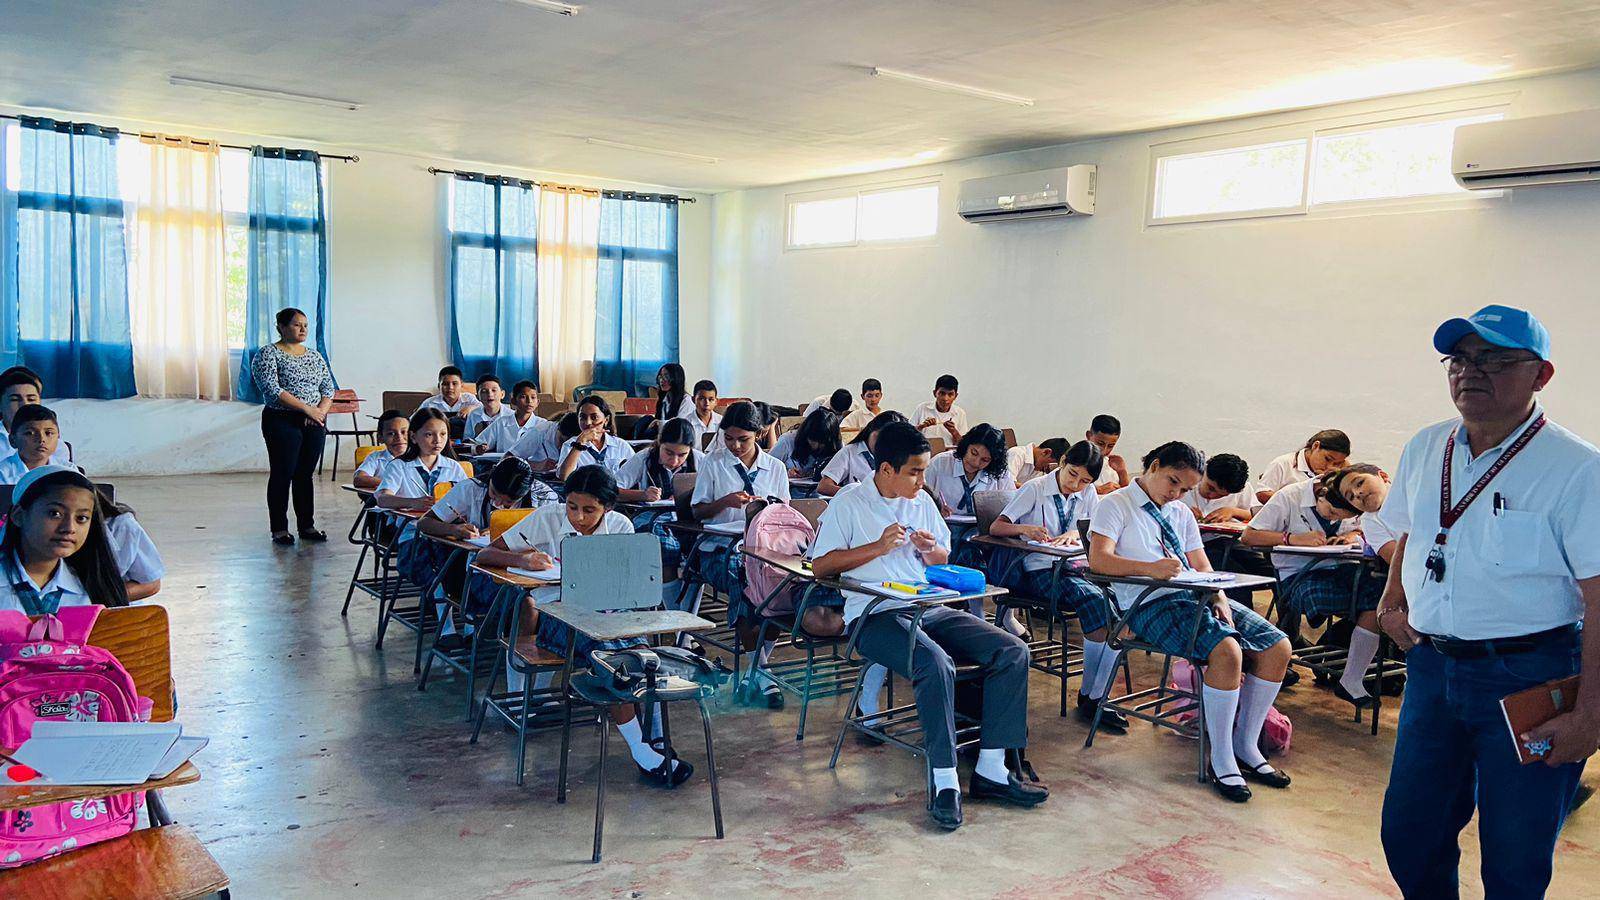 $!Estudiantes reciben sus clases en el Instituto Manuel de Jesús Subirana.